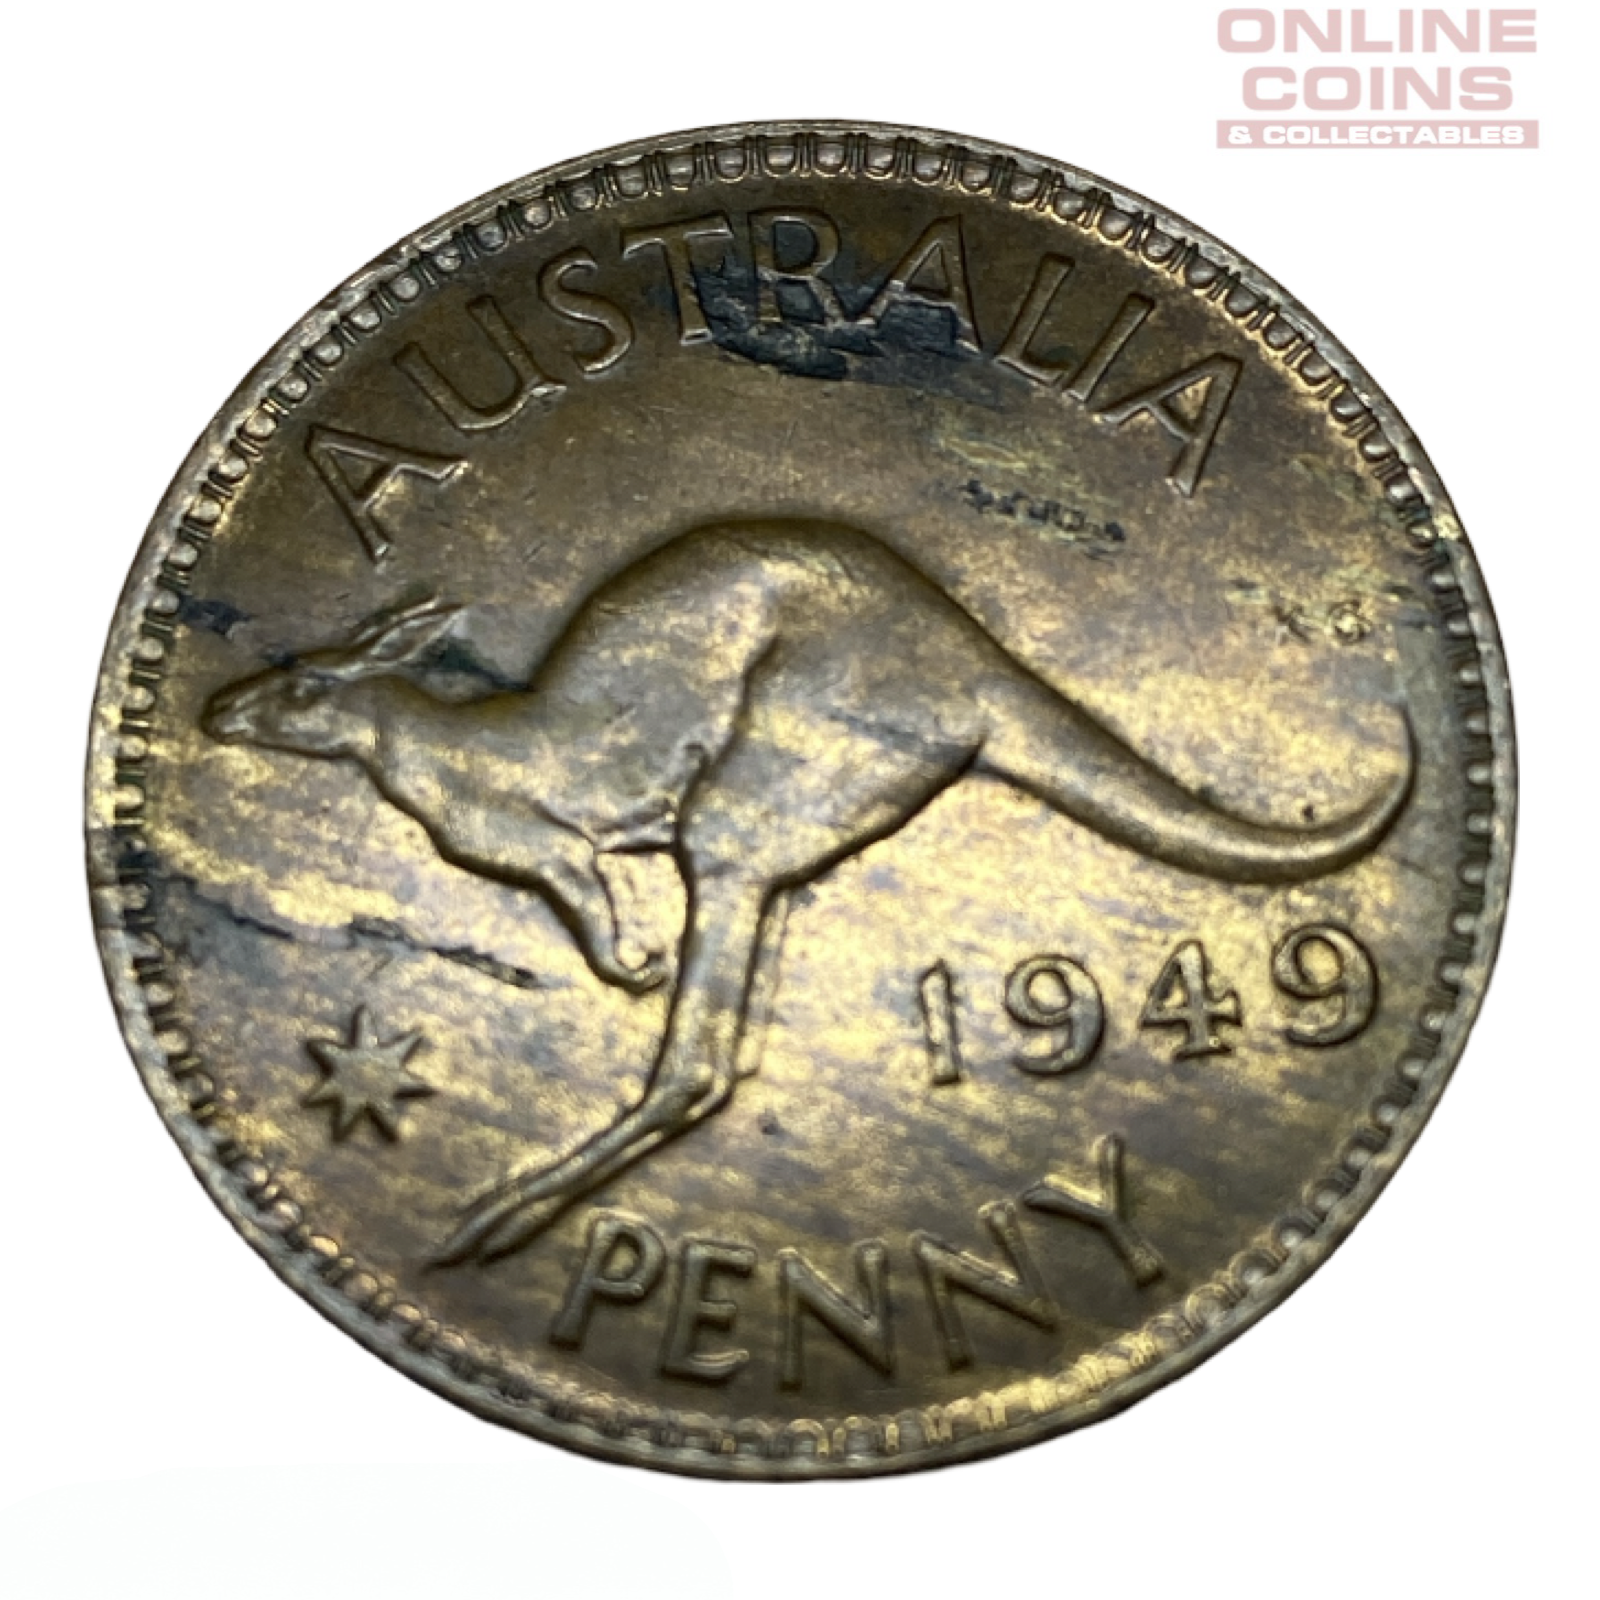 1949 Australian Penny - EF+ - Planchet Errors